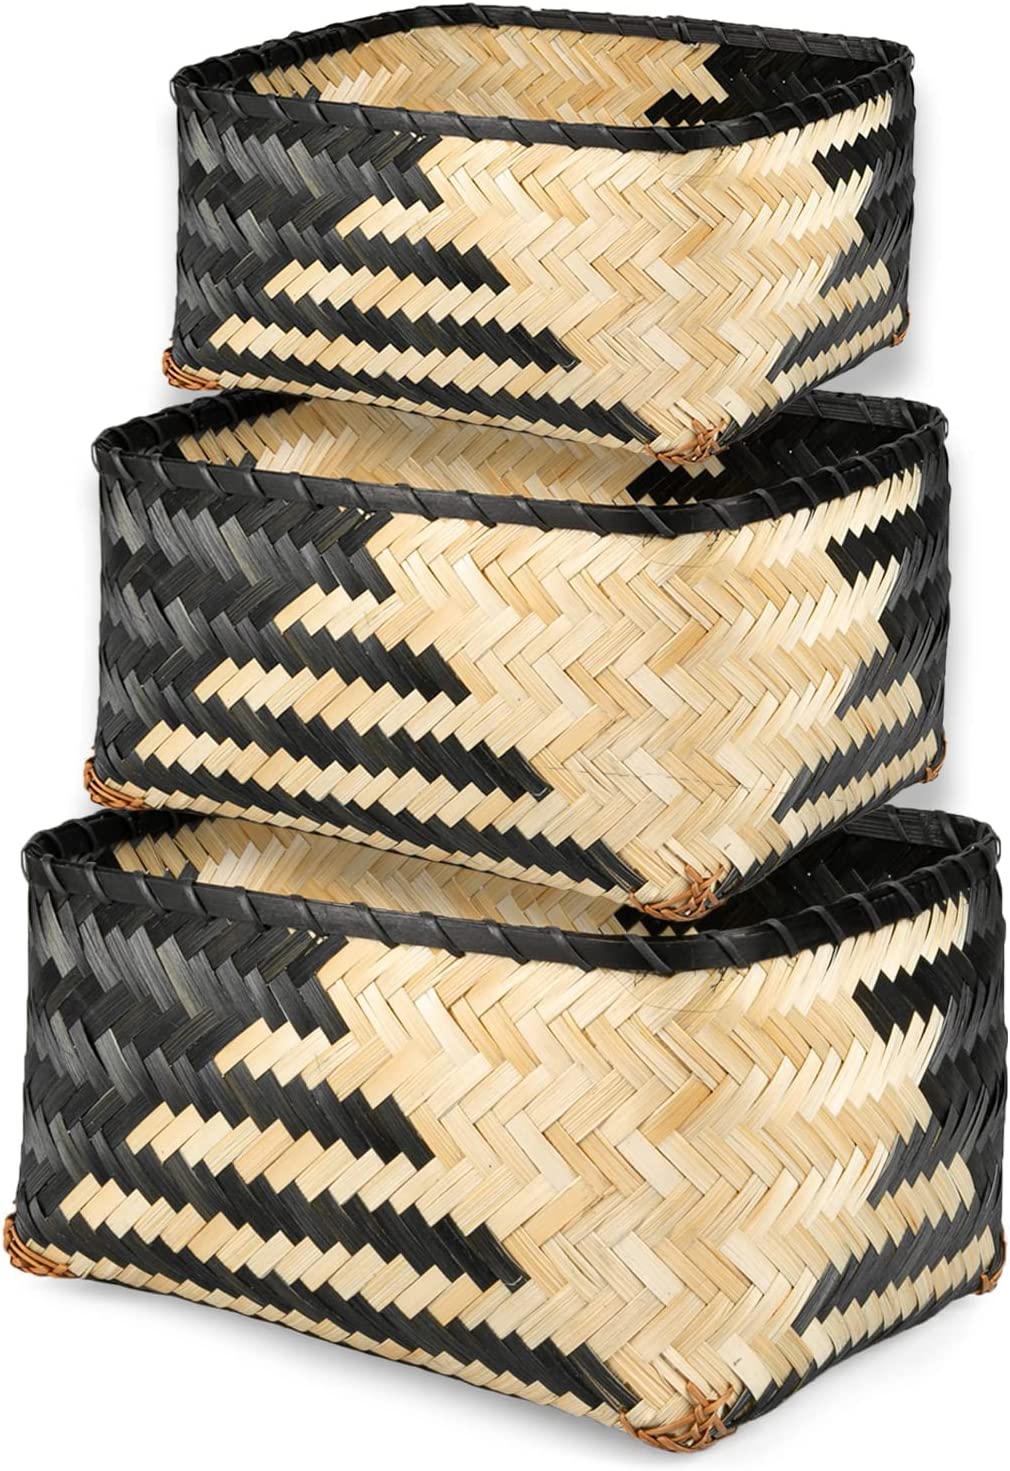 Crutello Woven Bamboo Storage Basket - Set of 3 black and natural color pattern organization basket living room boho decor